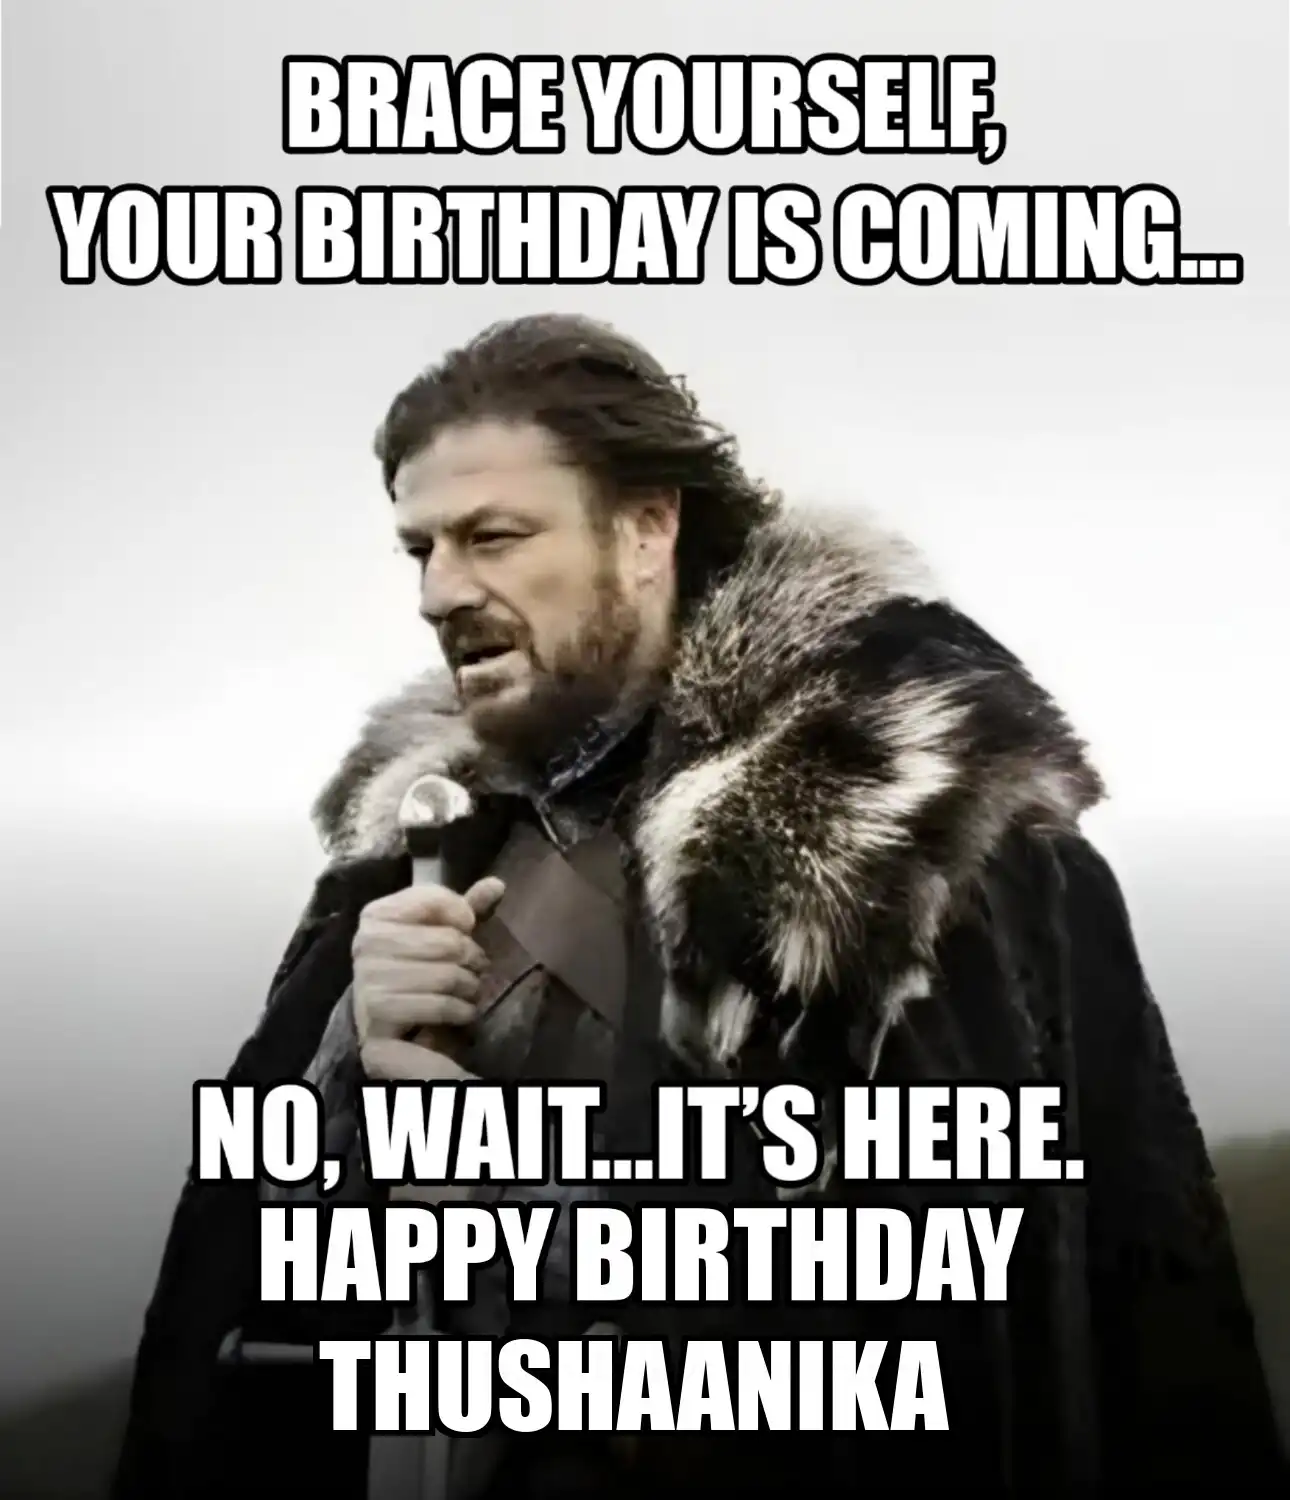 Happy Birthday Thushaanika Brace Yourself Your Birthday Is Coming Meme